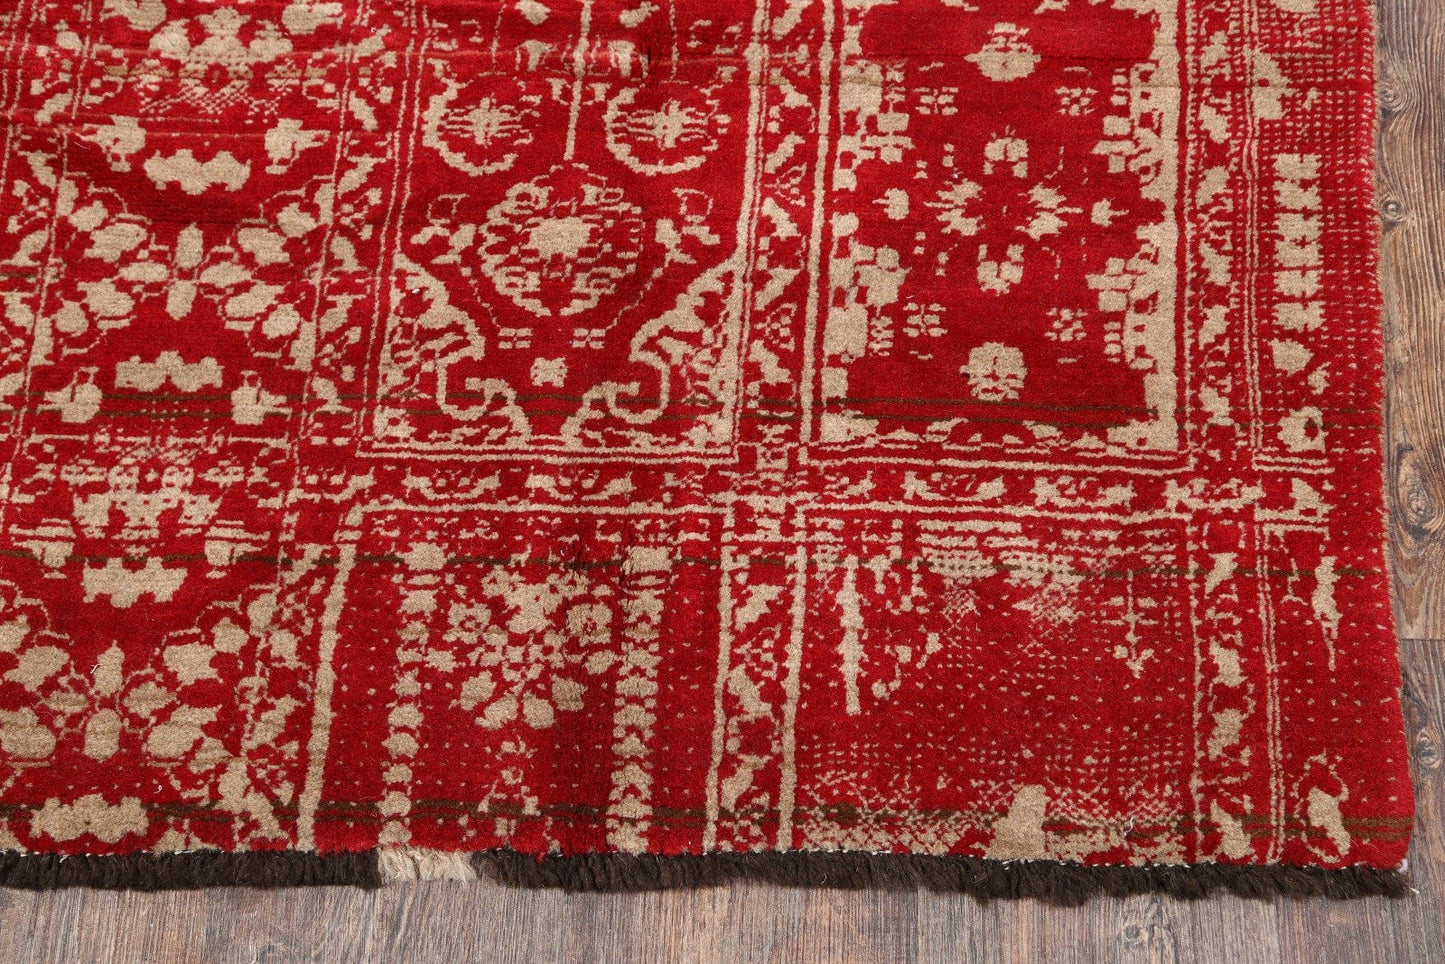 Geometric Shiraz Persian Hand-Knotted 5x7 Wool Area Rug